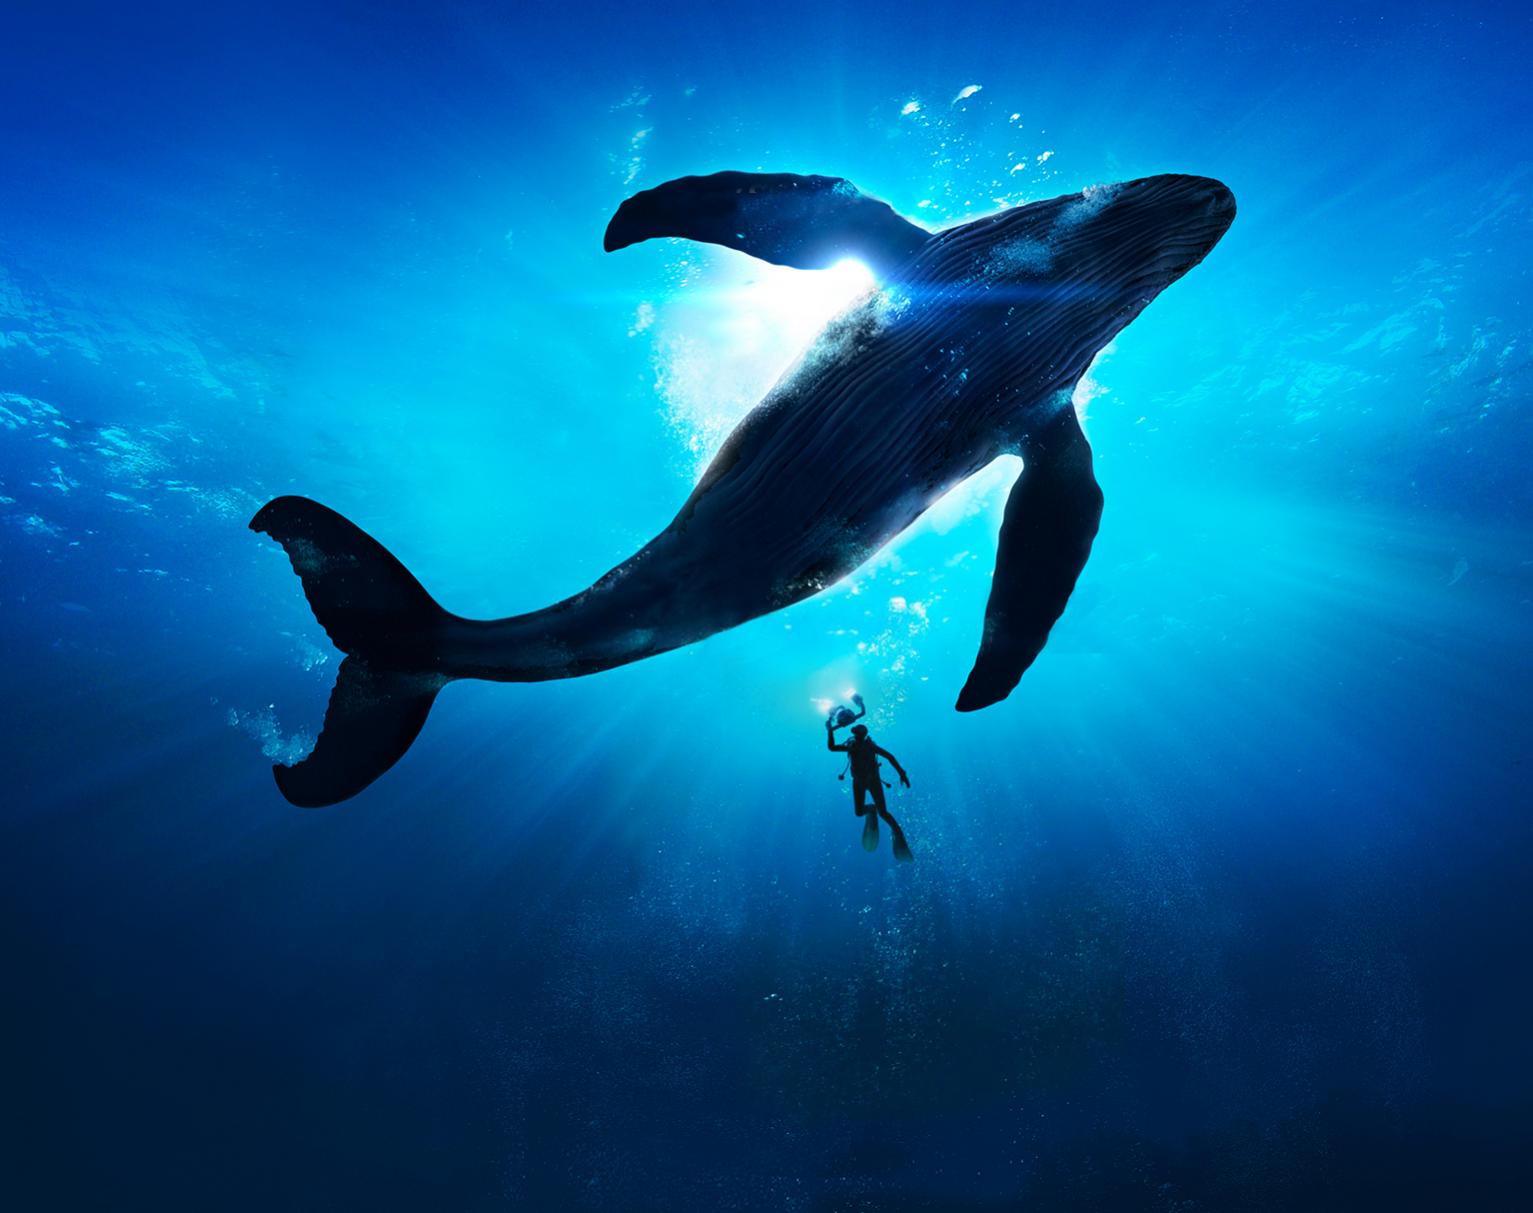 S8 whale wallpaper Samsung Galaxy S8